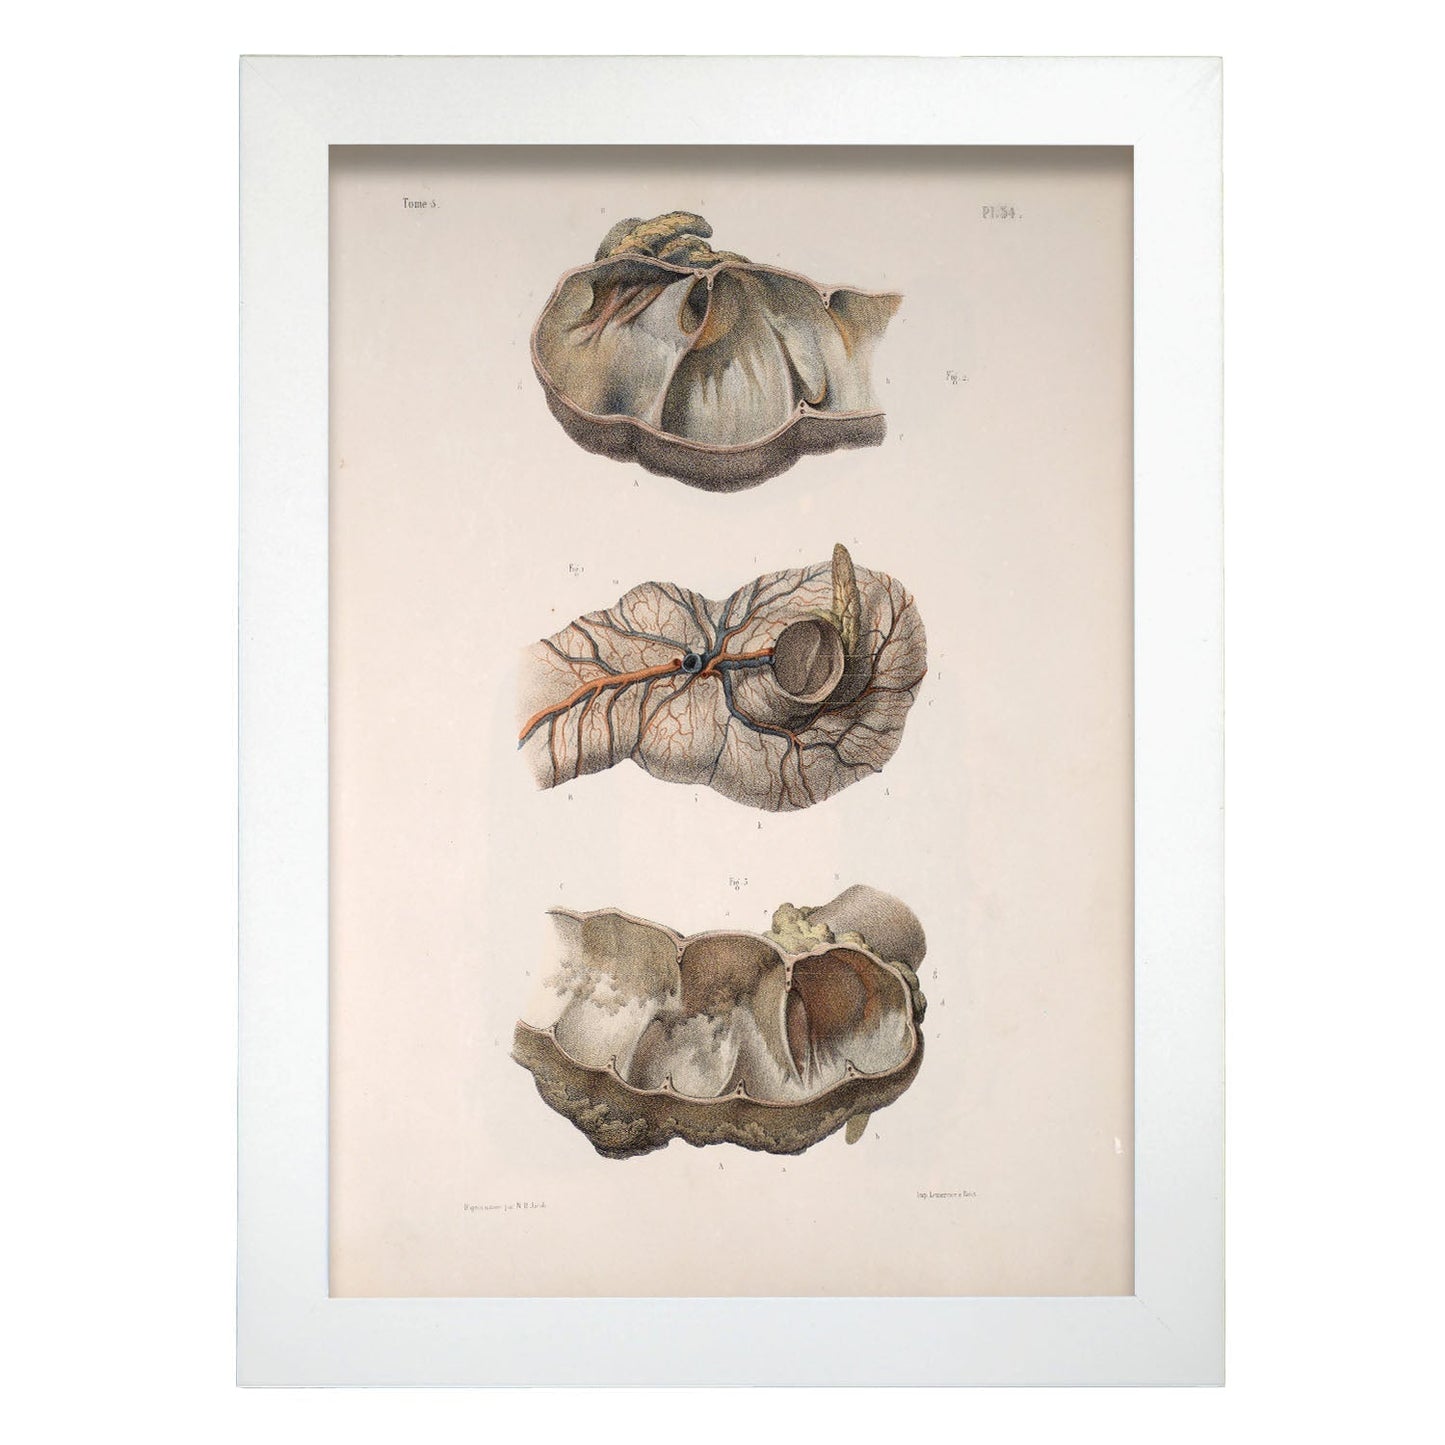 Large intestine; cecum and appendix-Artwork-Nacnic-A4-Marco Blanco-Nacnic Estudio SL